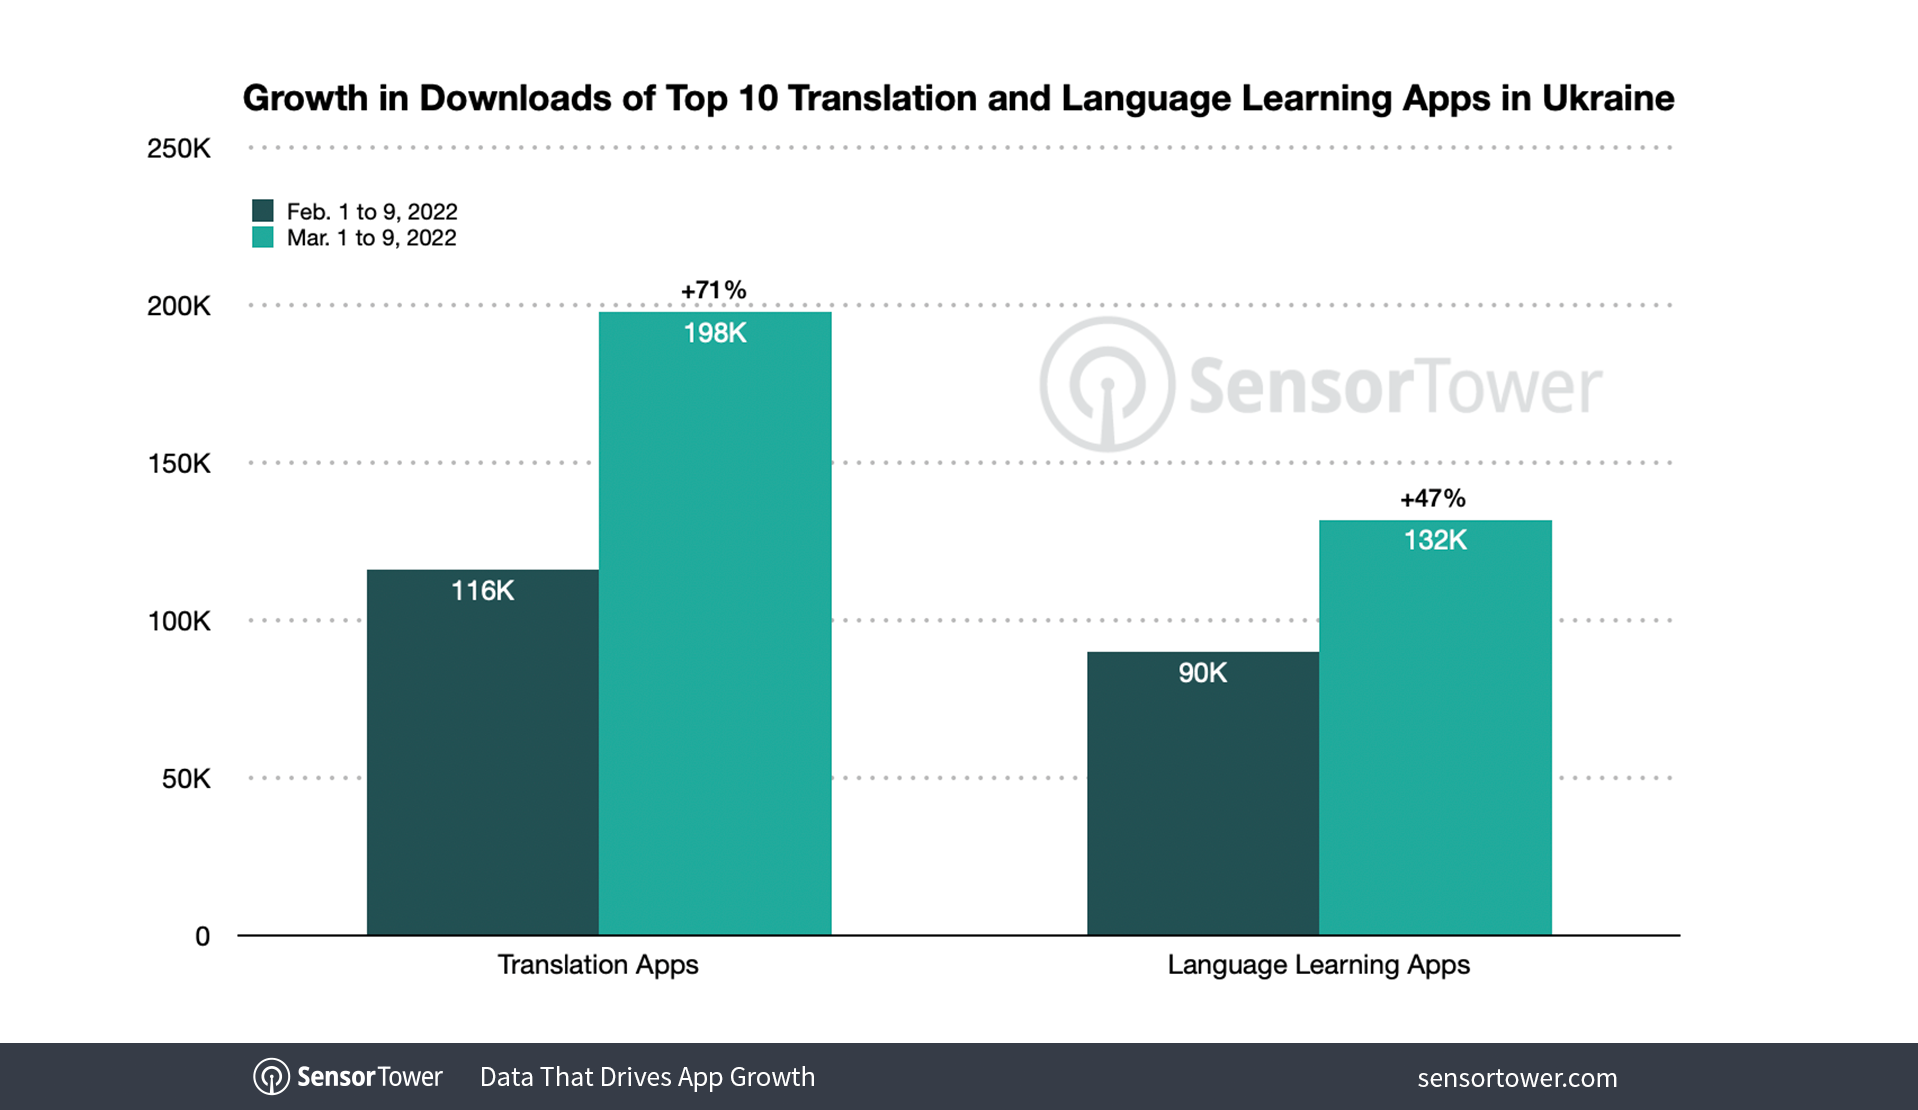 Translation Apps Grow Installs 71% in Ukraine